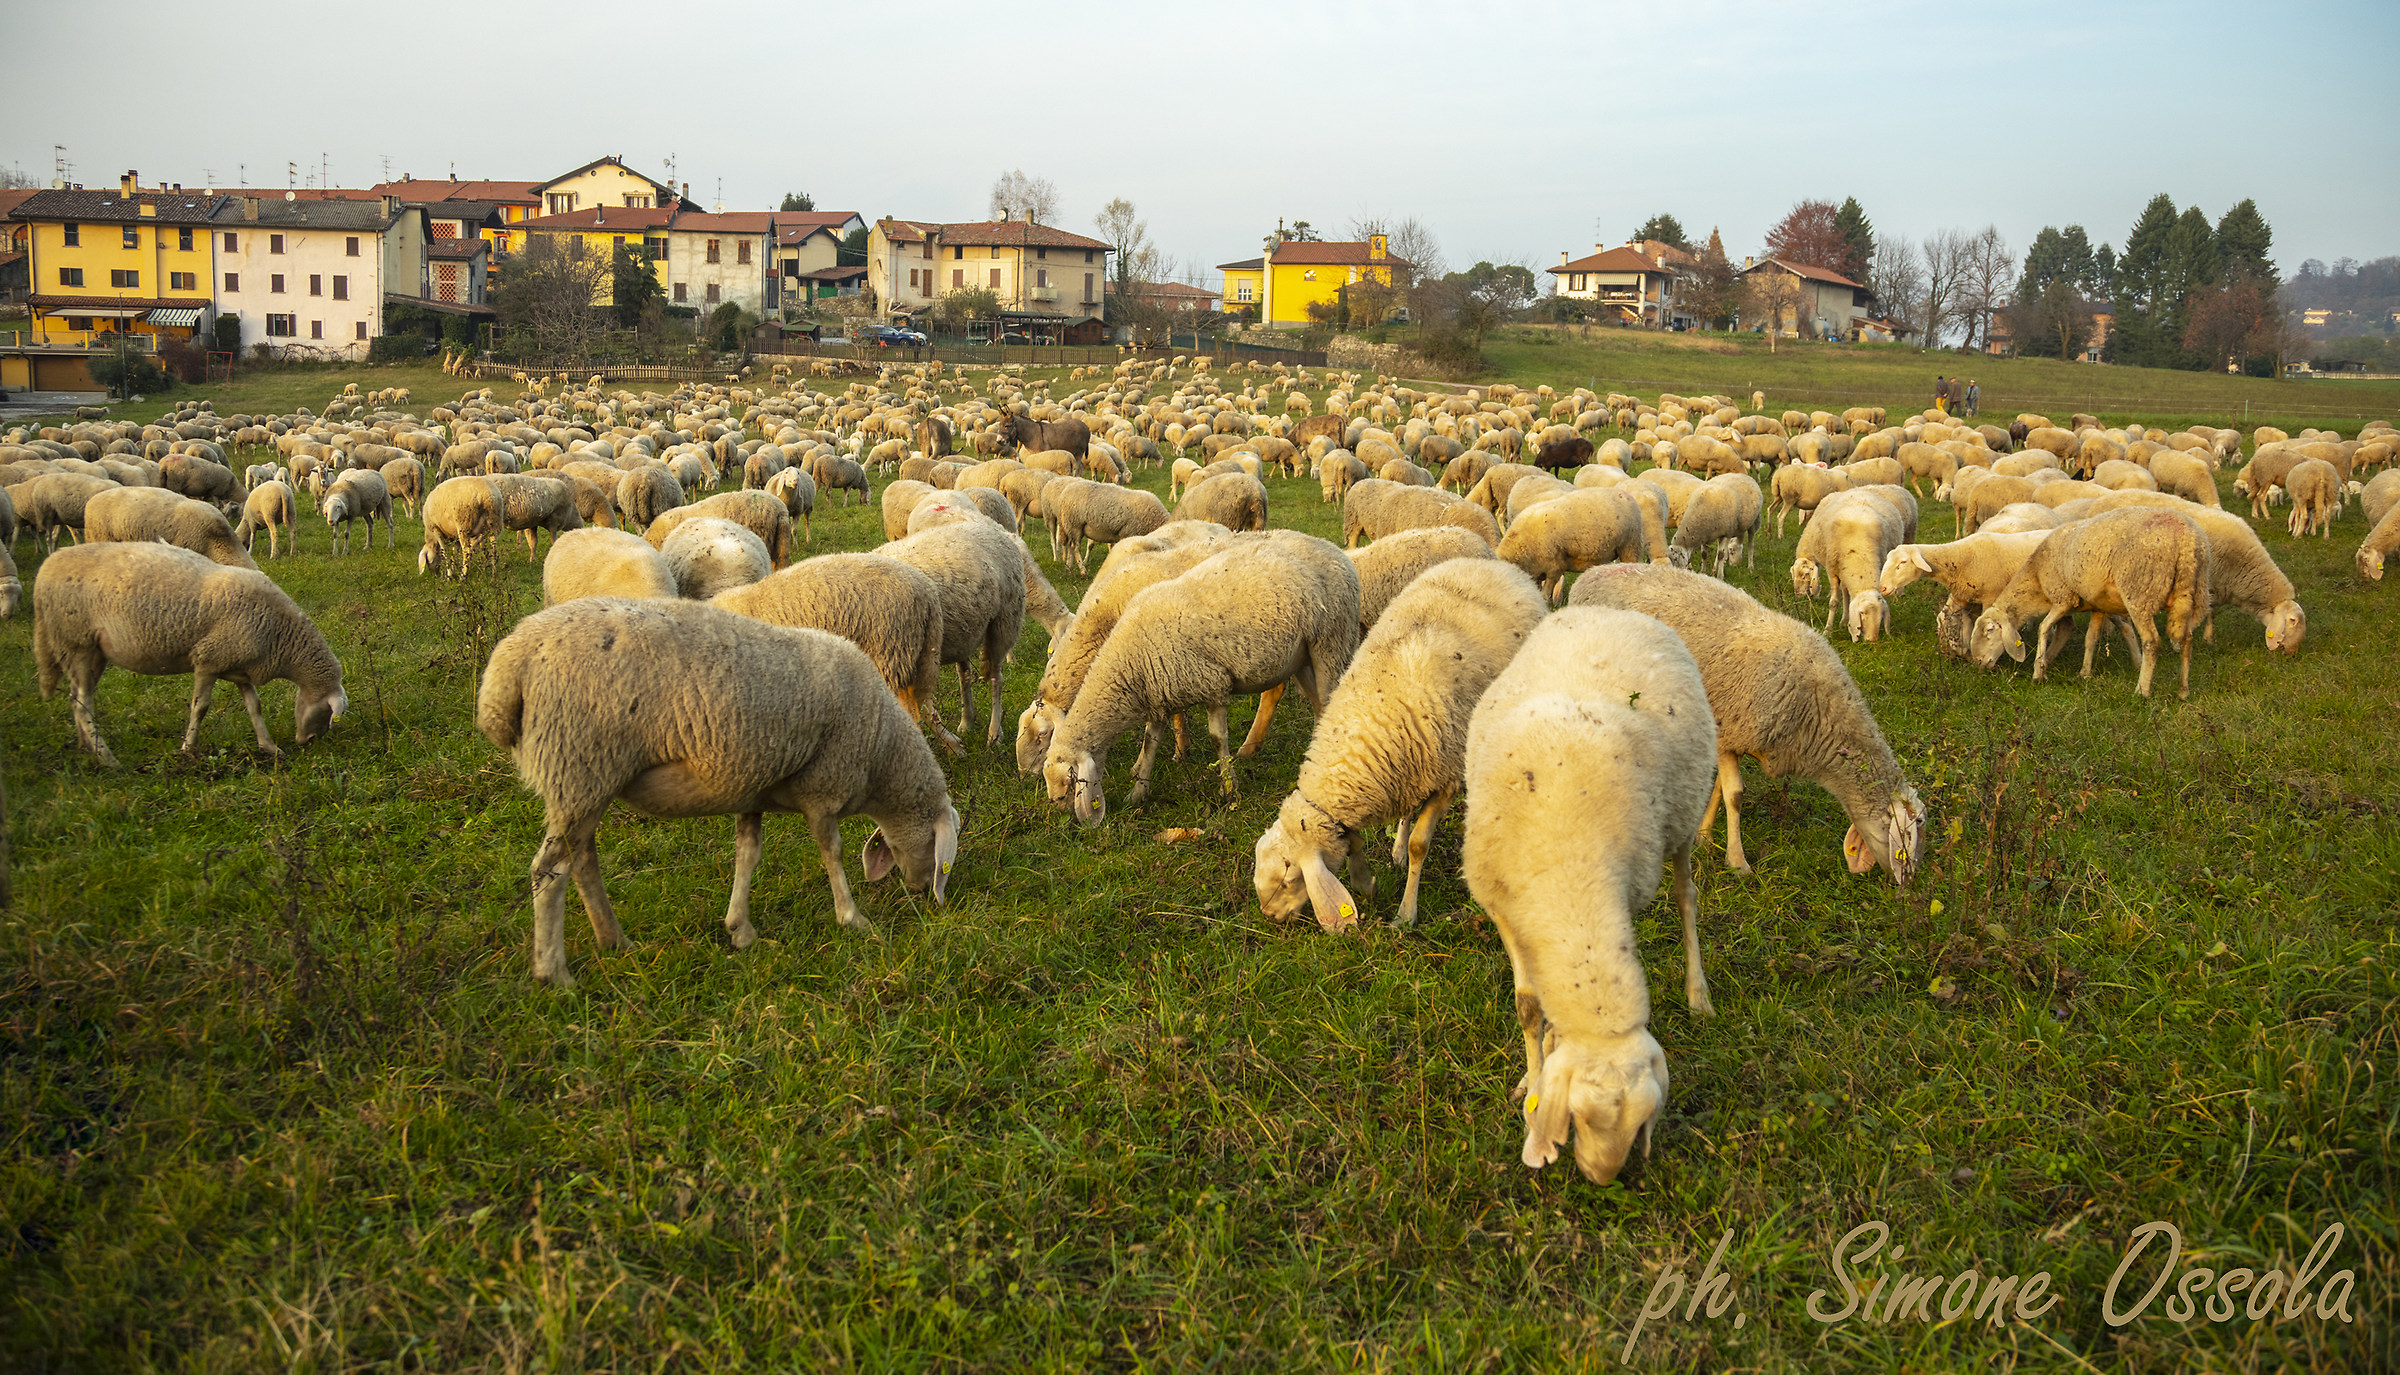 To Vegonno... Sheep grazing...